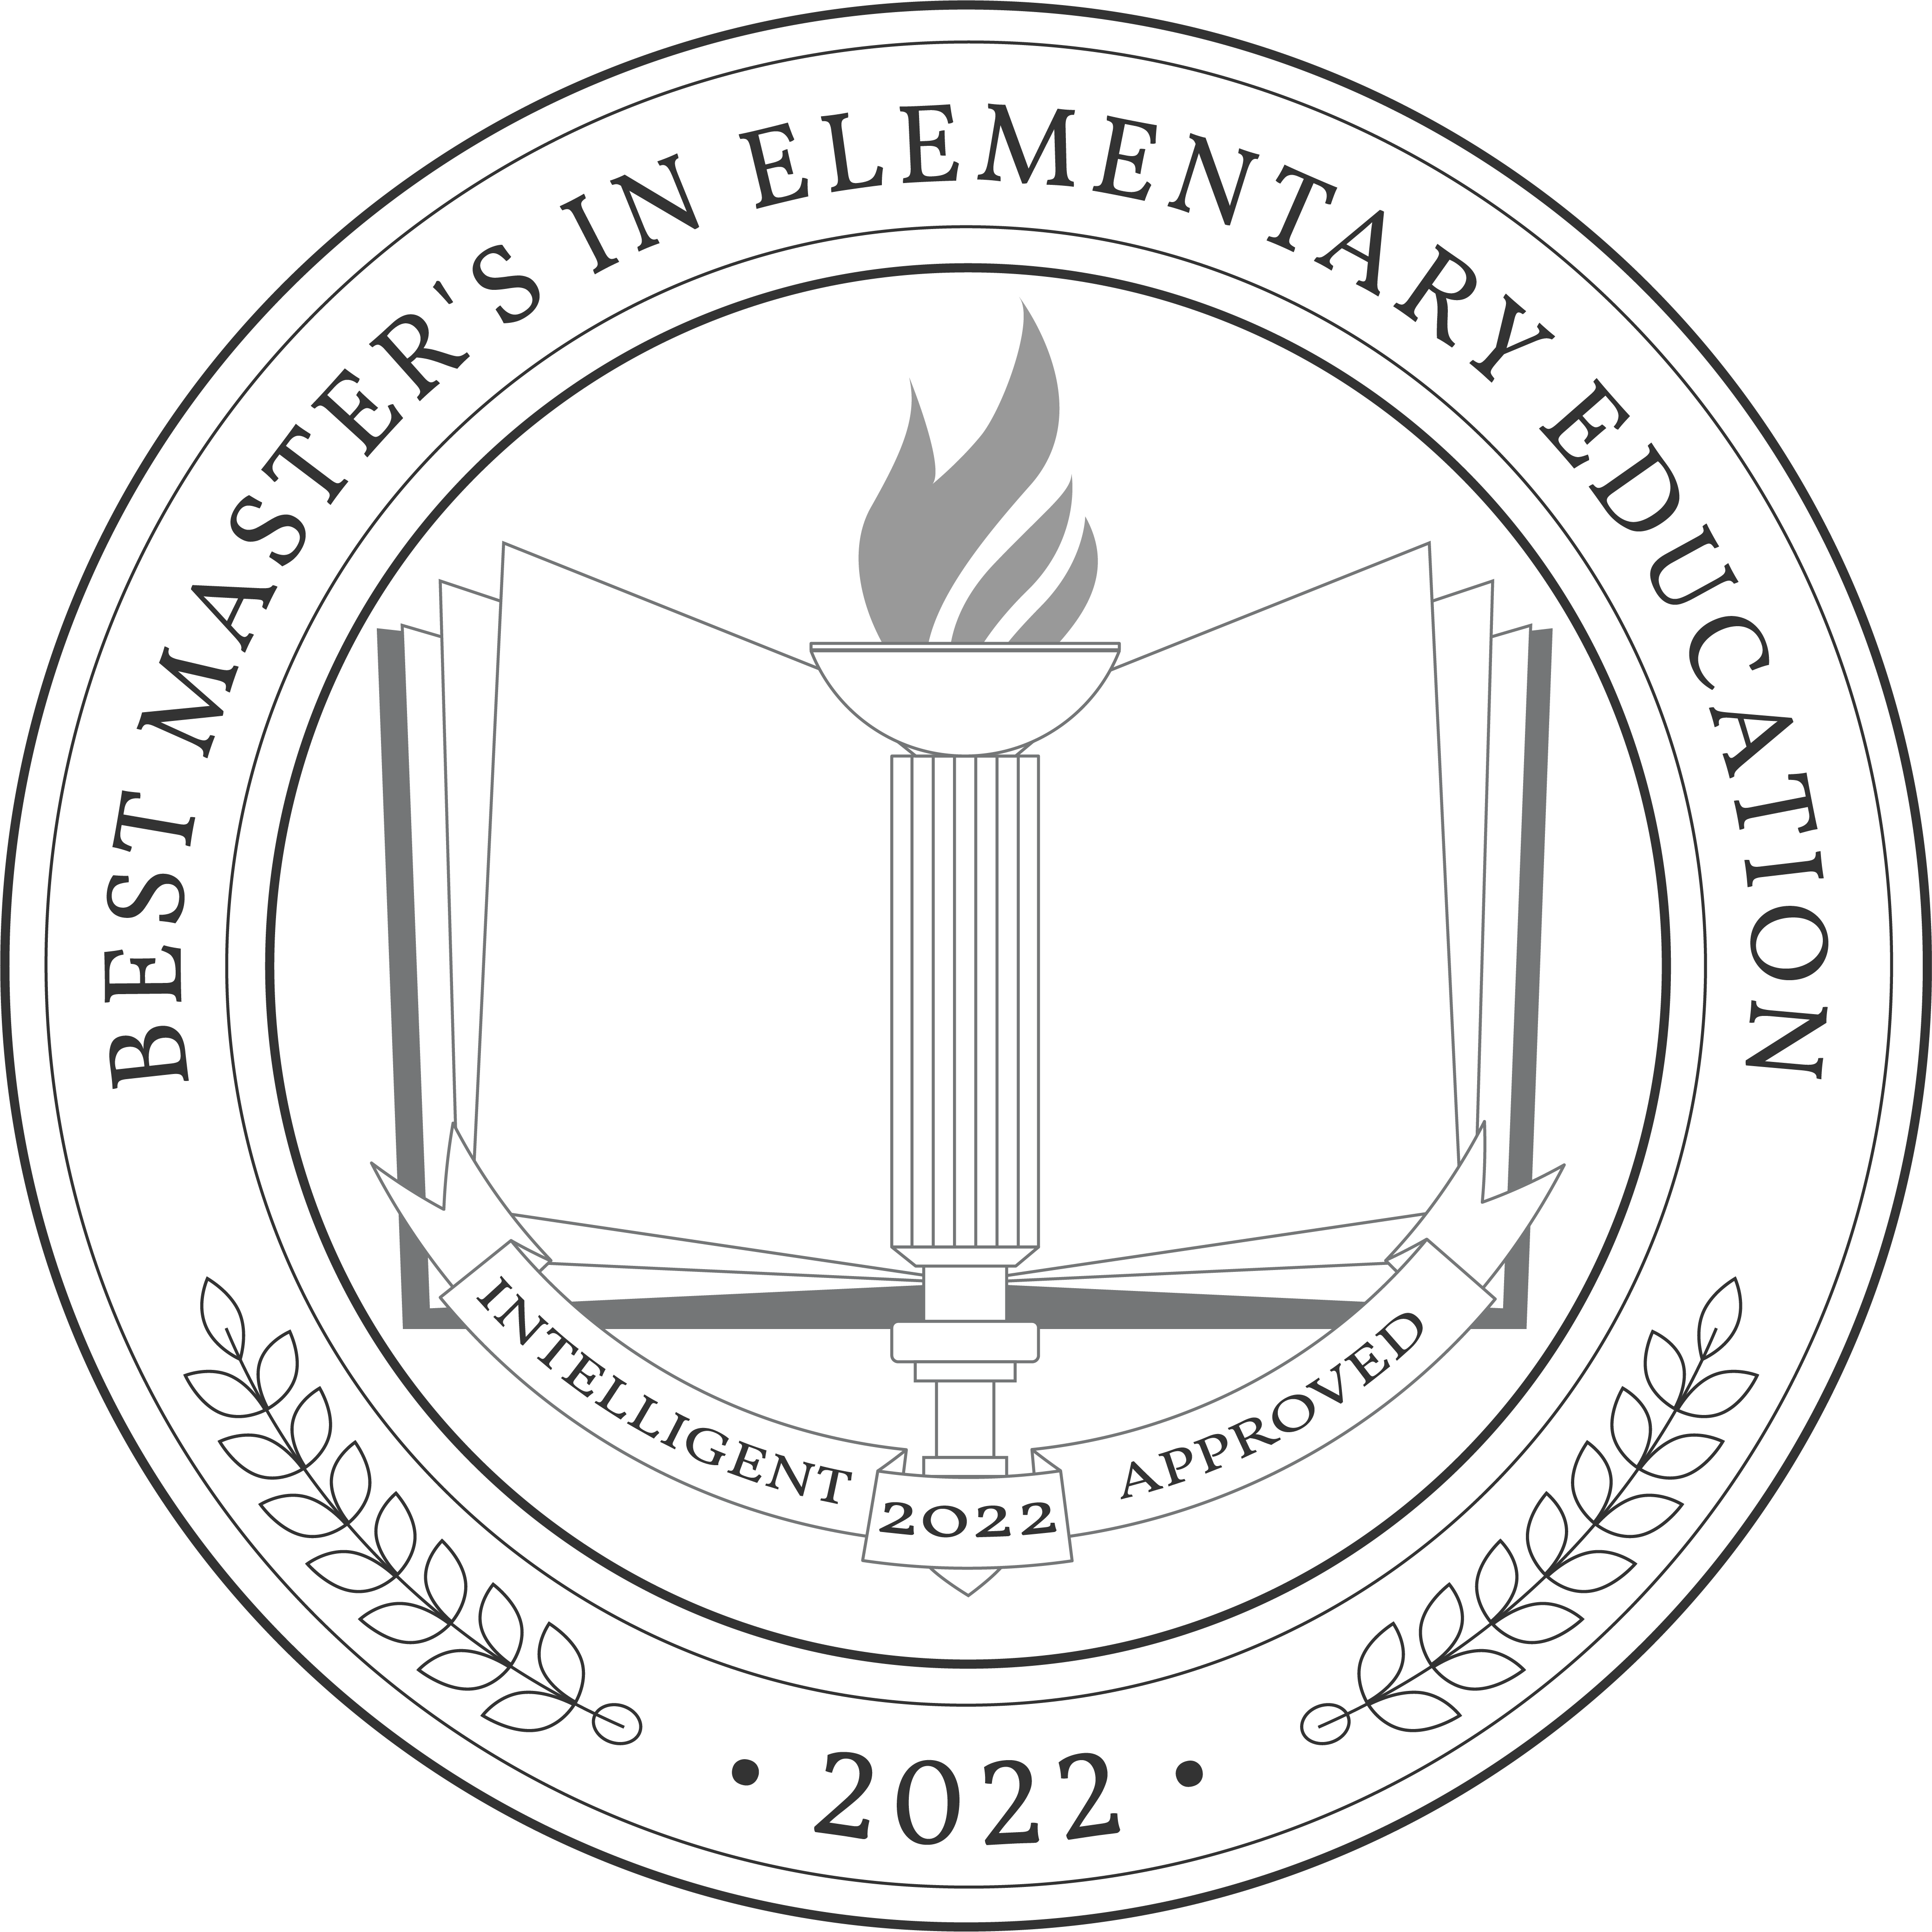 Best Online Master's in Elementary Education Degree Programs